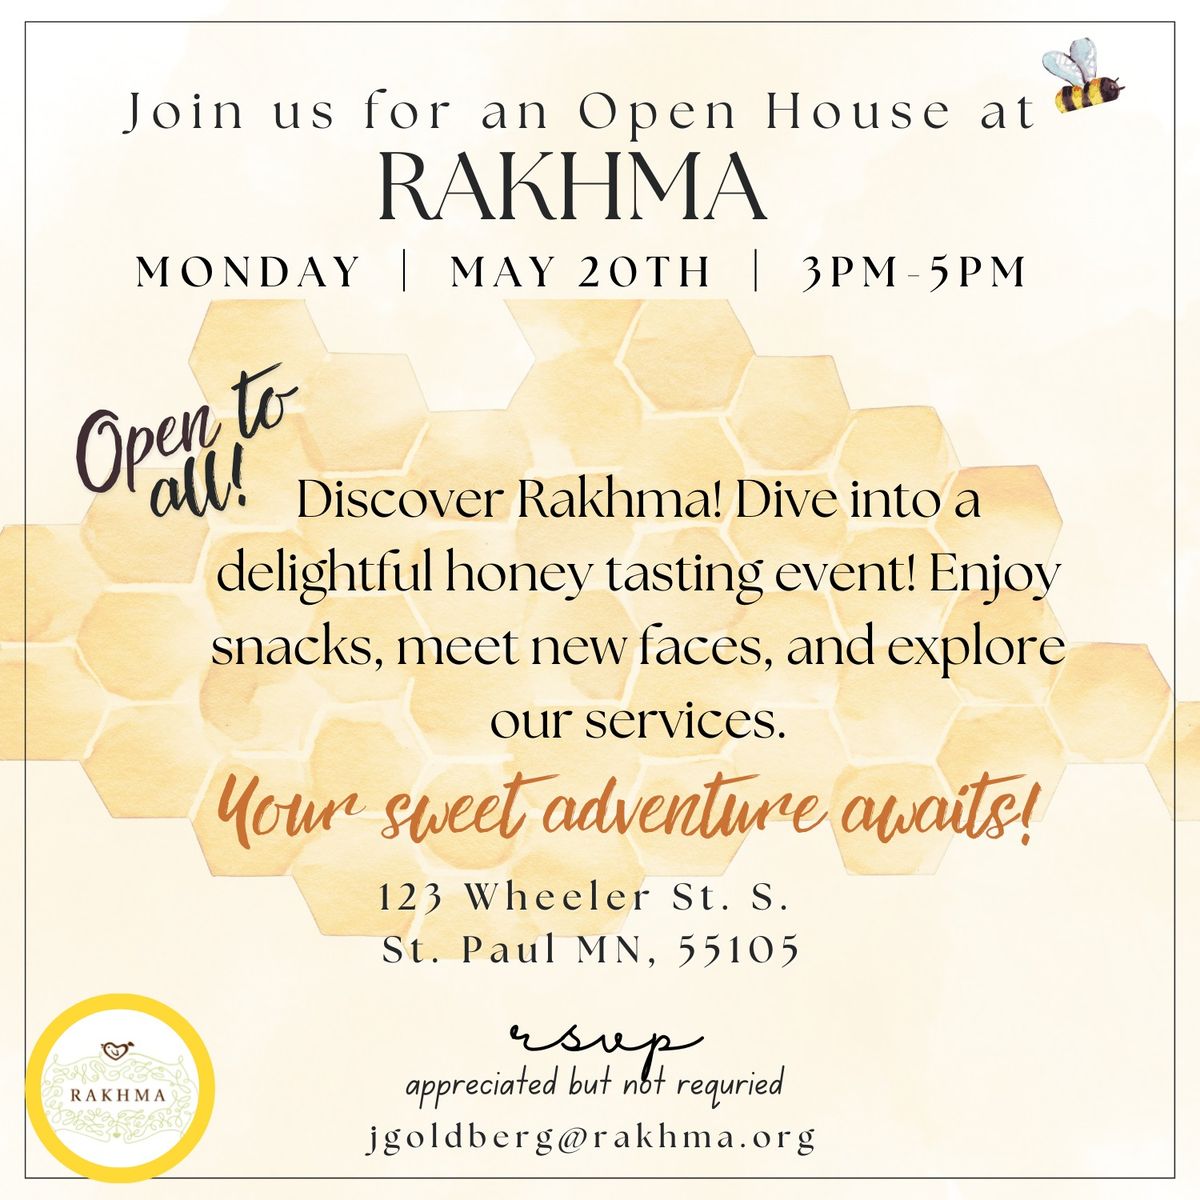 Rakhma's Open House for National Bee Day